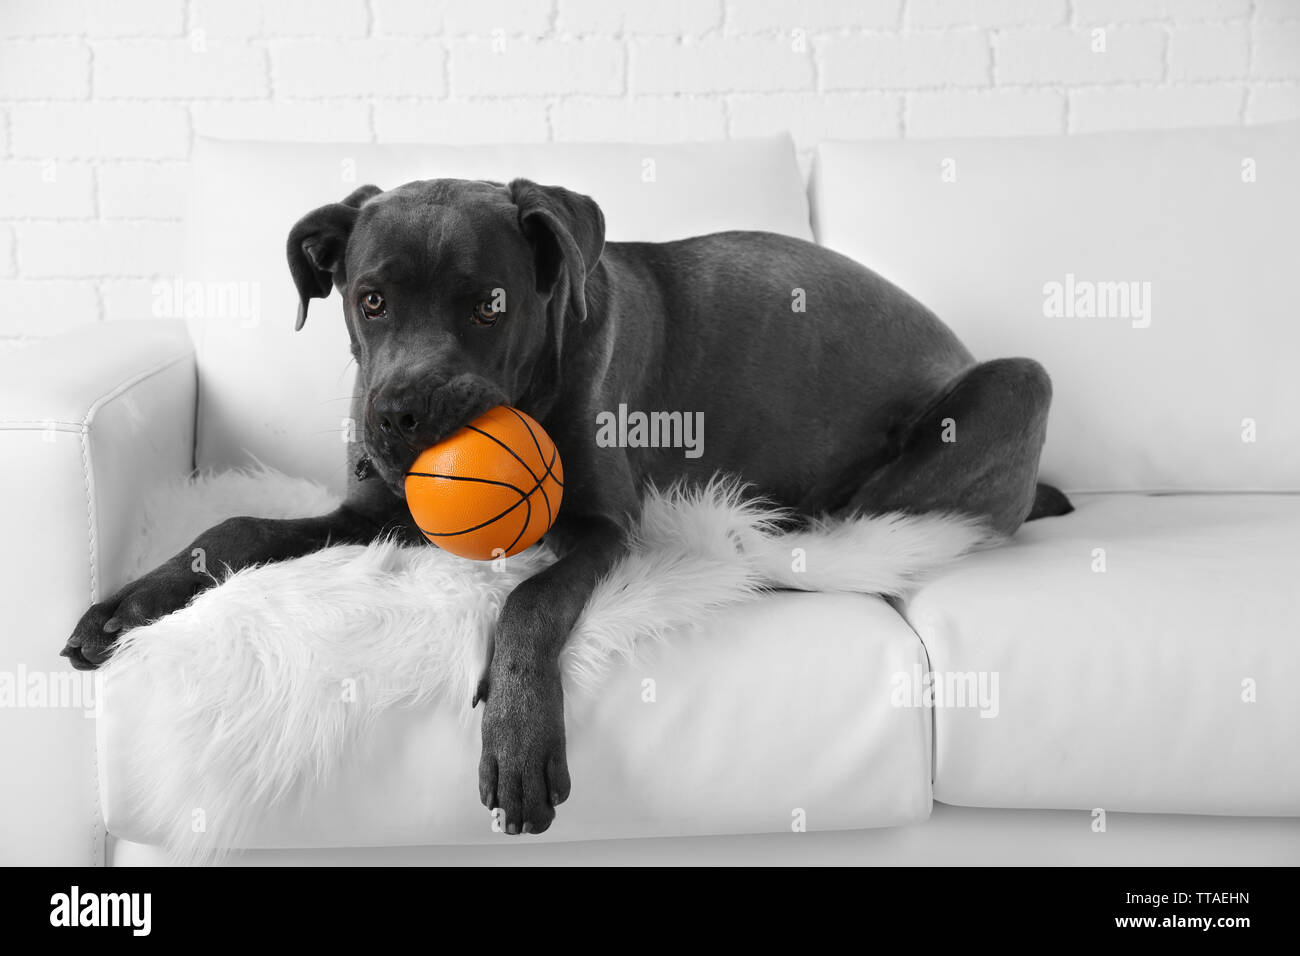 https://c8.alamy.com/comp/TTAEHN/cane-corso-italiano-dog-lying-on-sofa-with-ball-at-home-TTAEHN.jpg